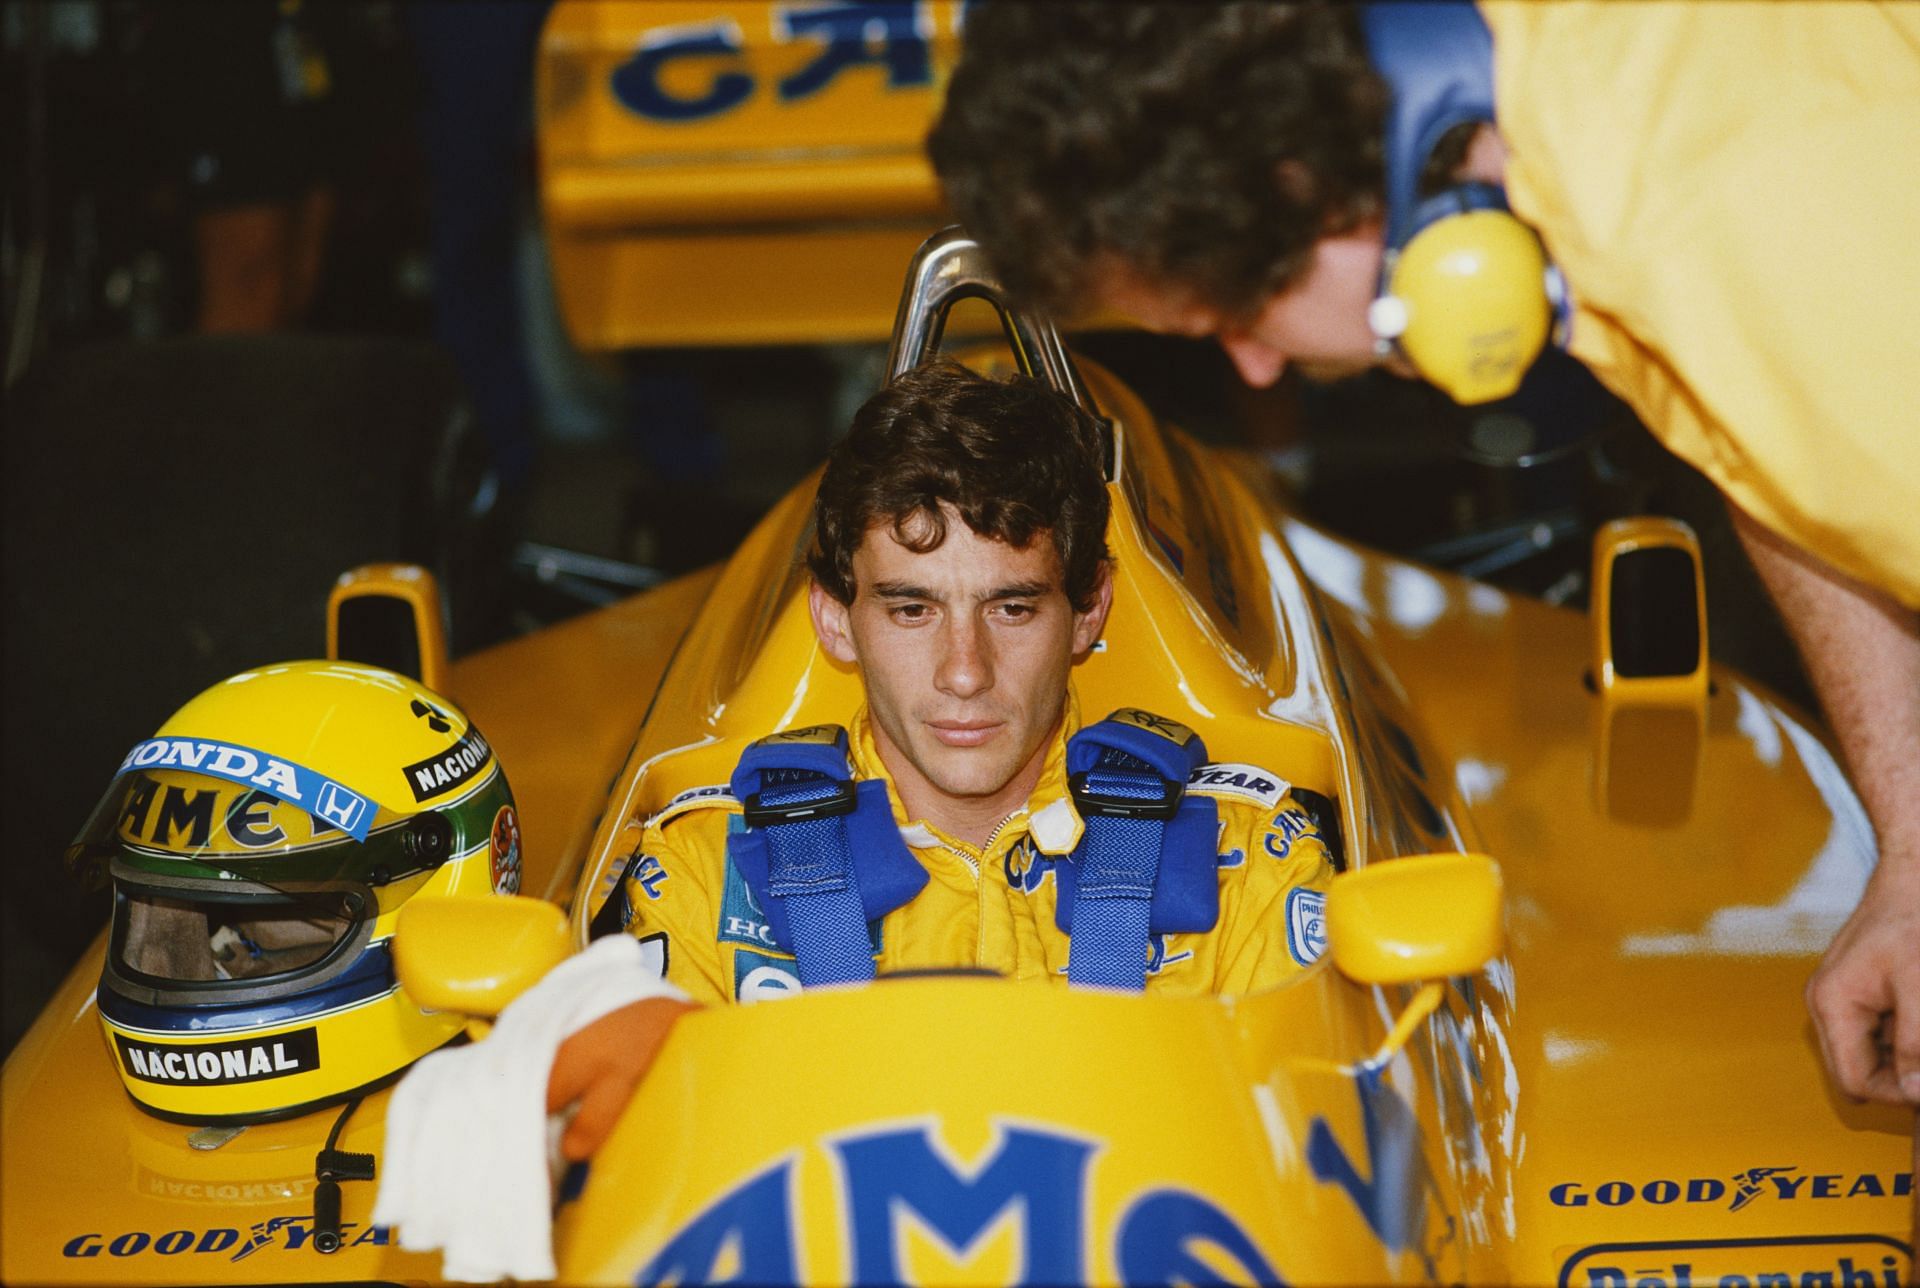 Ayrton Senna once drove for Williams.